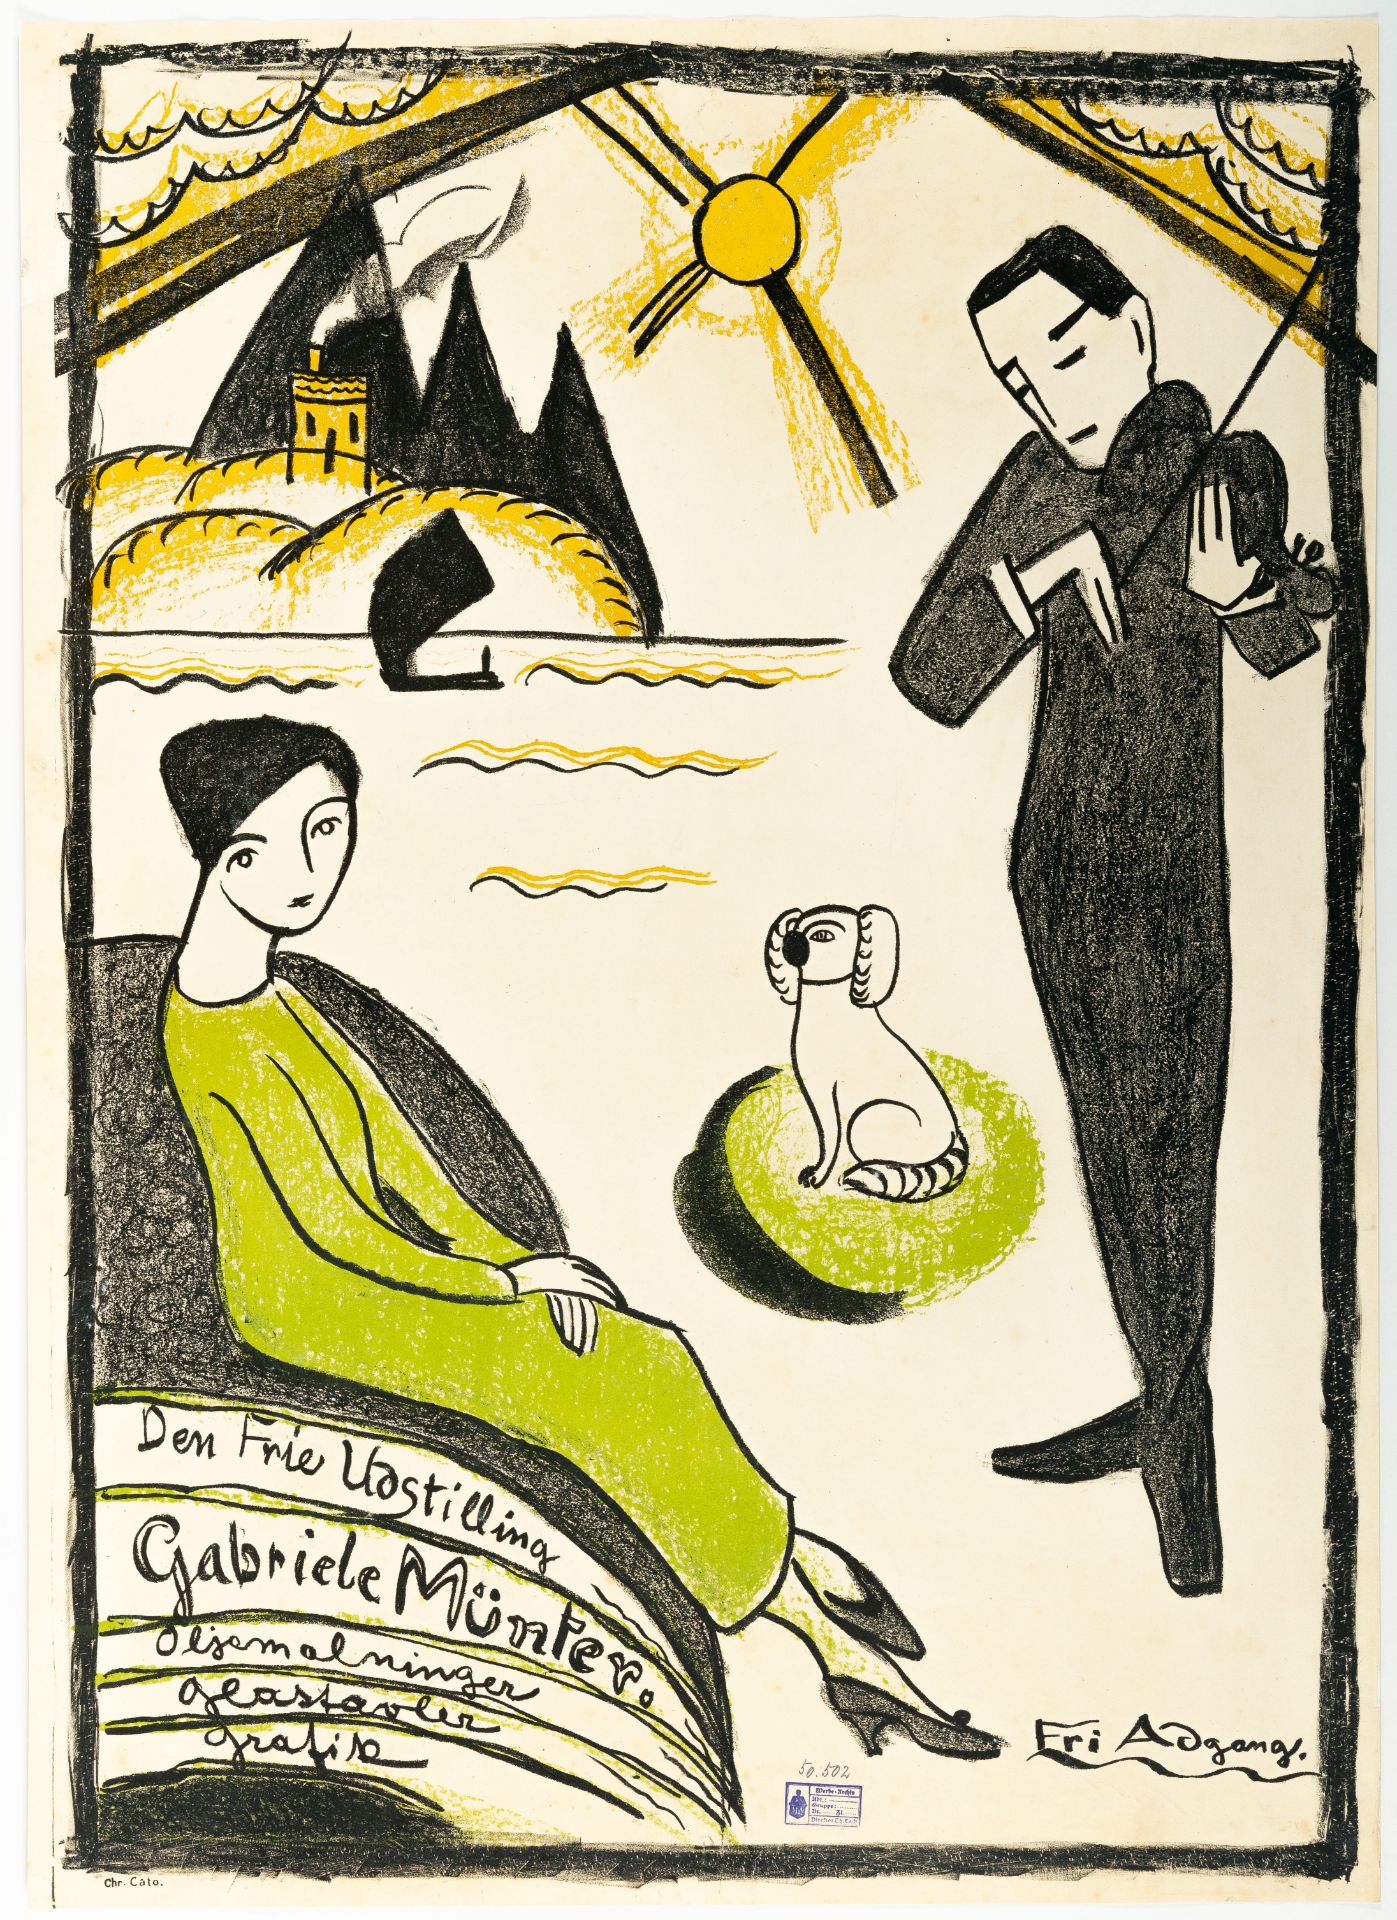 Gabriele Münter (1877 Berlin - Murnau 1962) – Poster for the Gabriele Münter exhibition Copenhagen. - Image 2 of 3